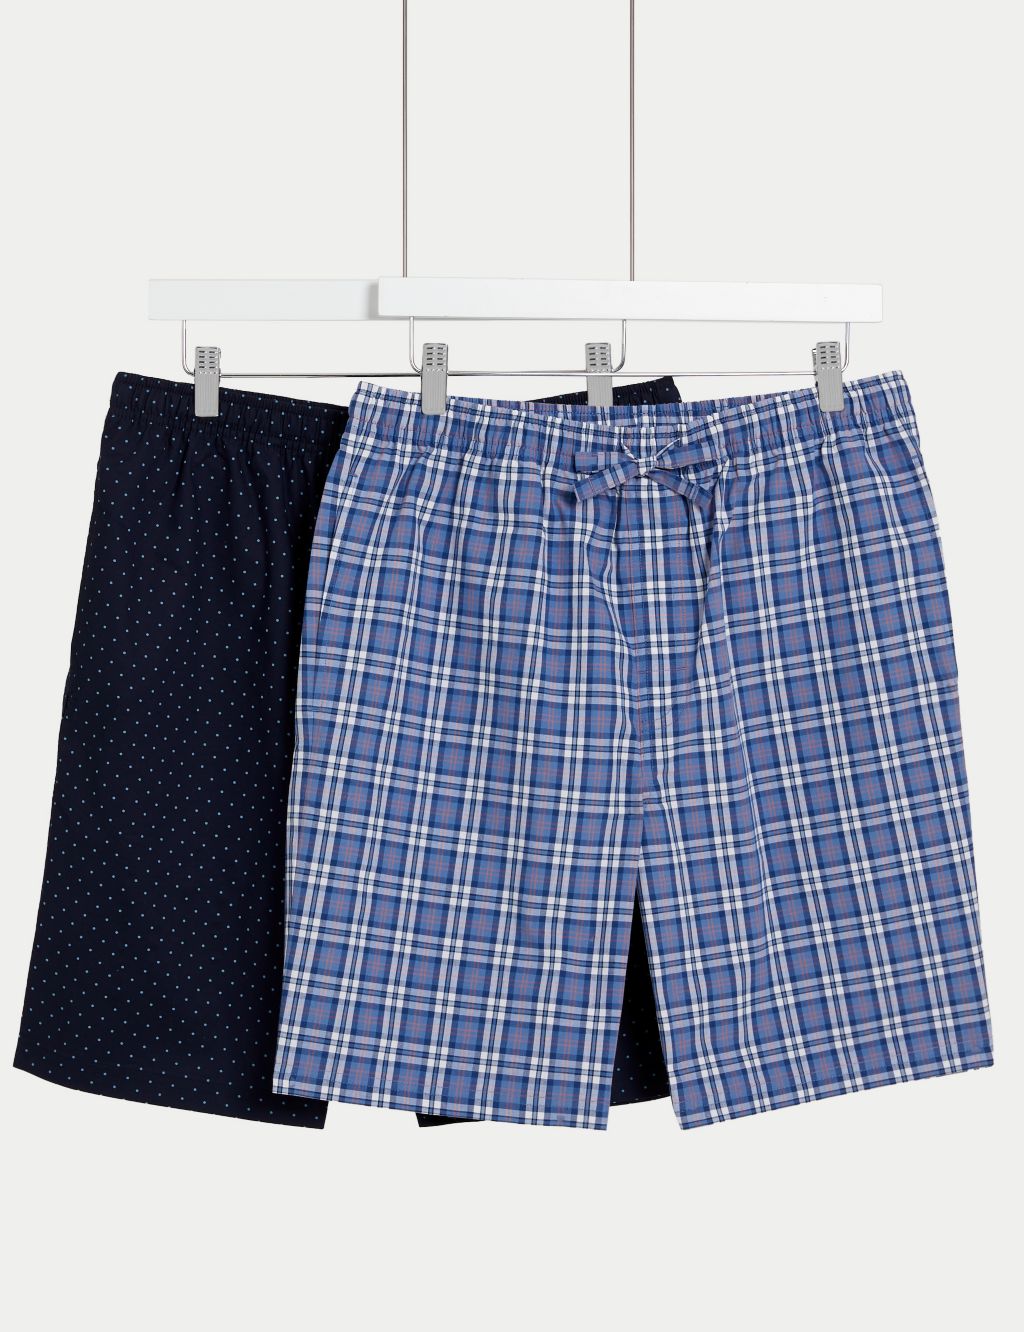 Badger Smith Pajama Shorts for Women - 100% Cotton Sleep Shorts - Ultra  Soft PJ Shorts - Women's Sleeping Boxer Shorts, Red Navy, Medium :  : Clothing, Shoes & Accessories